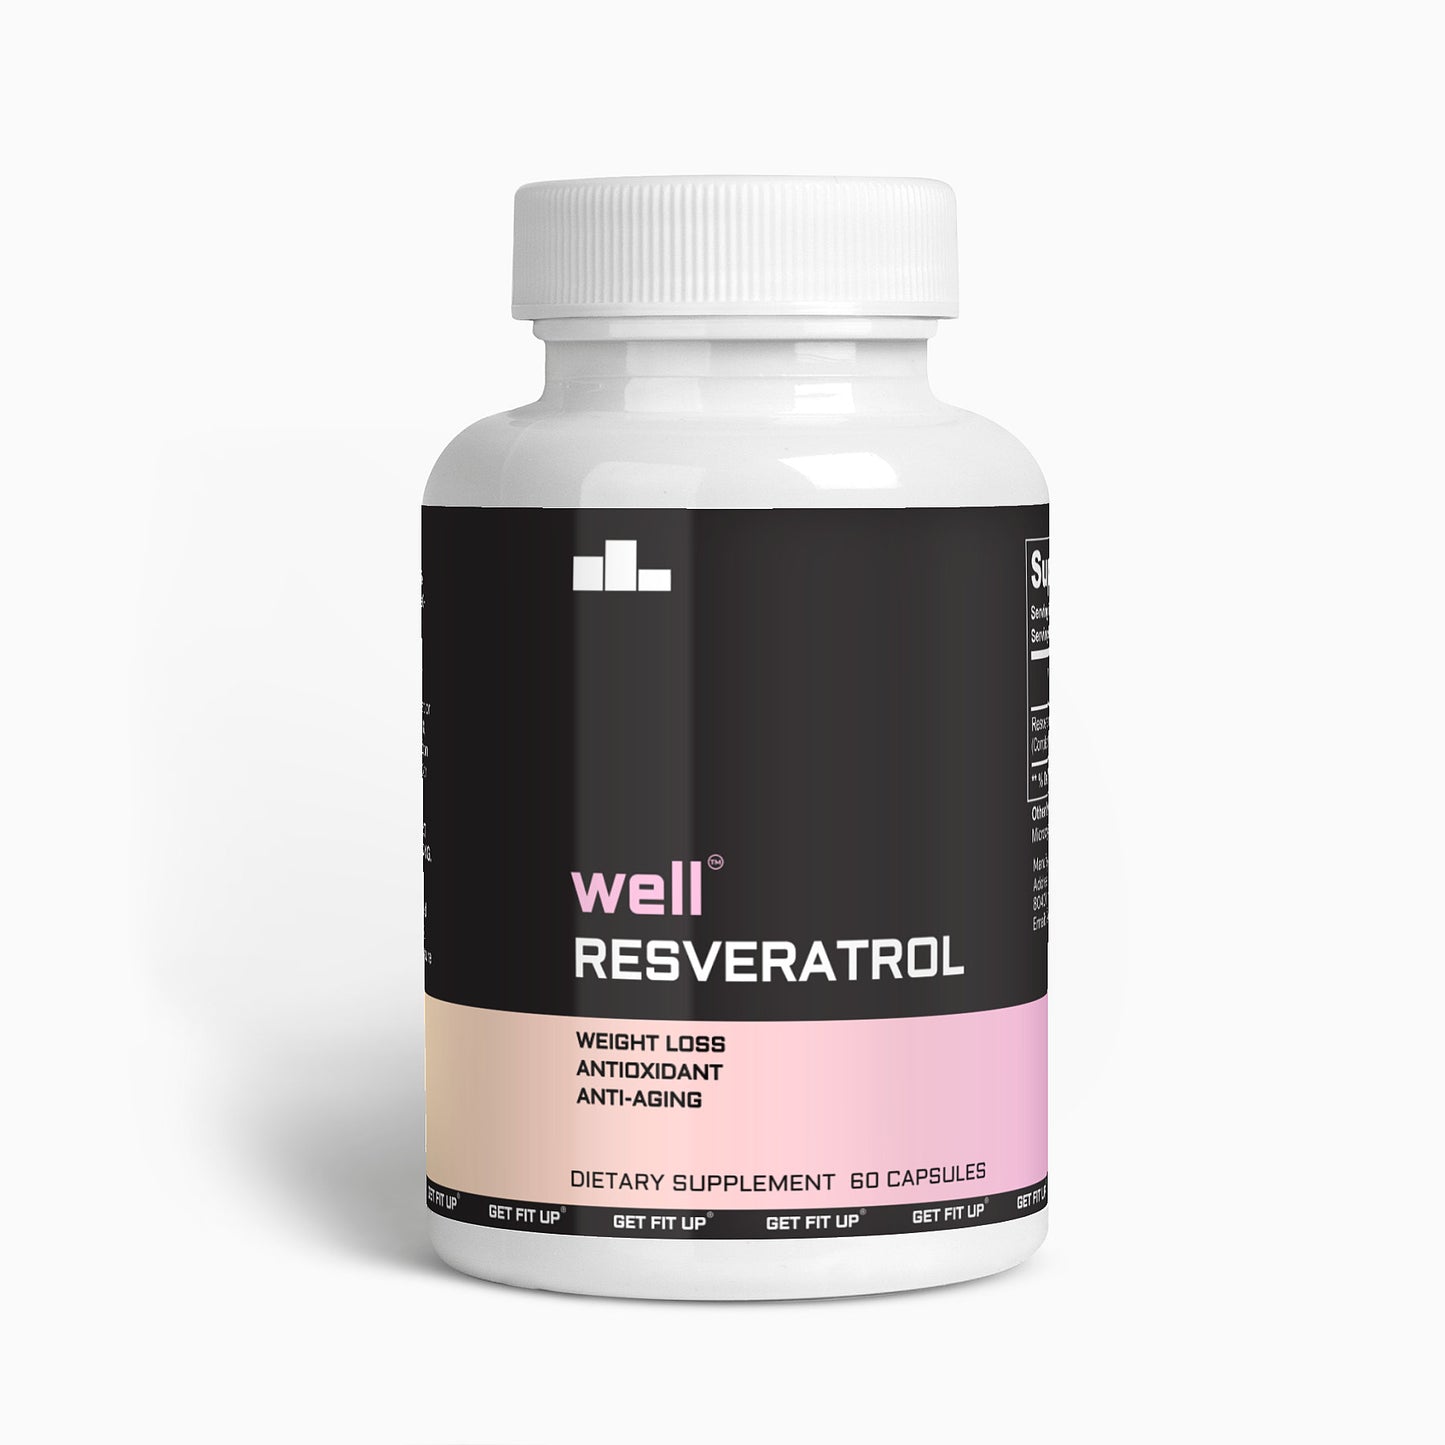 Well® Resveratrol